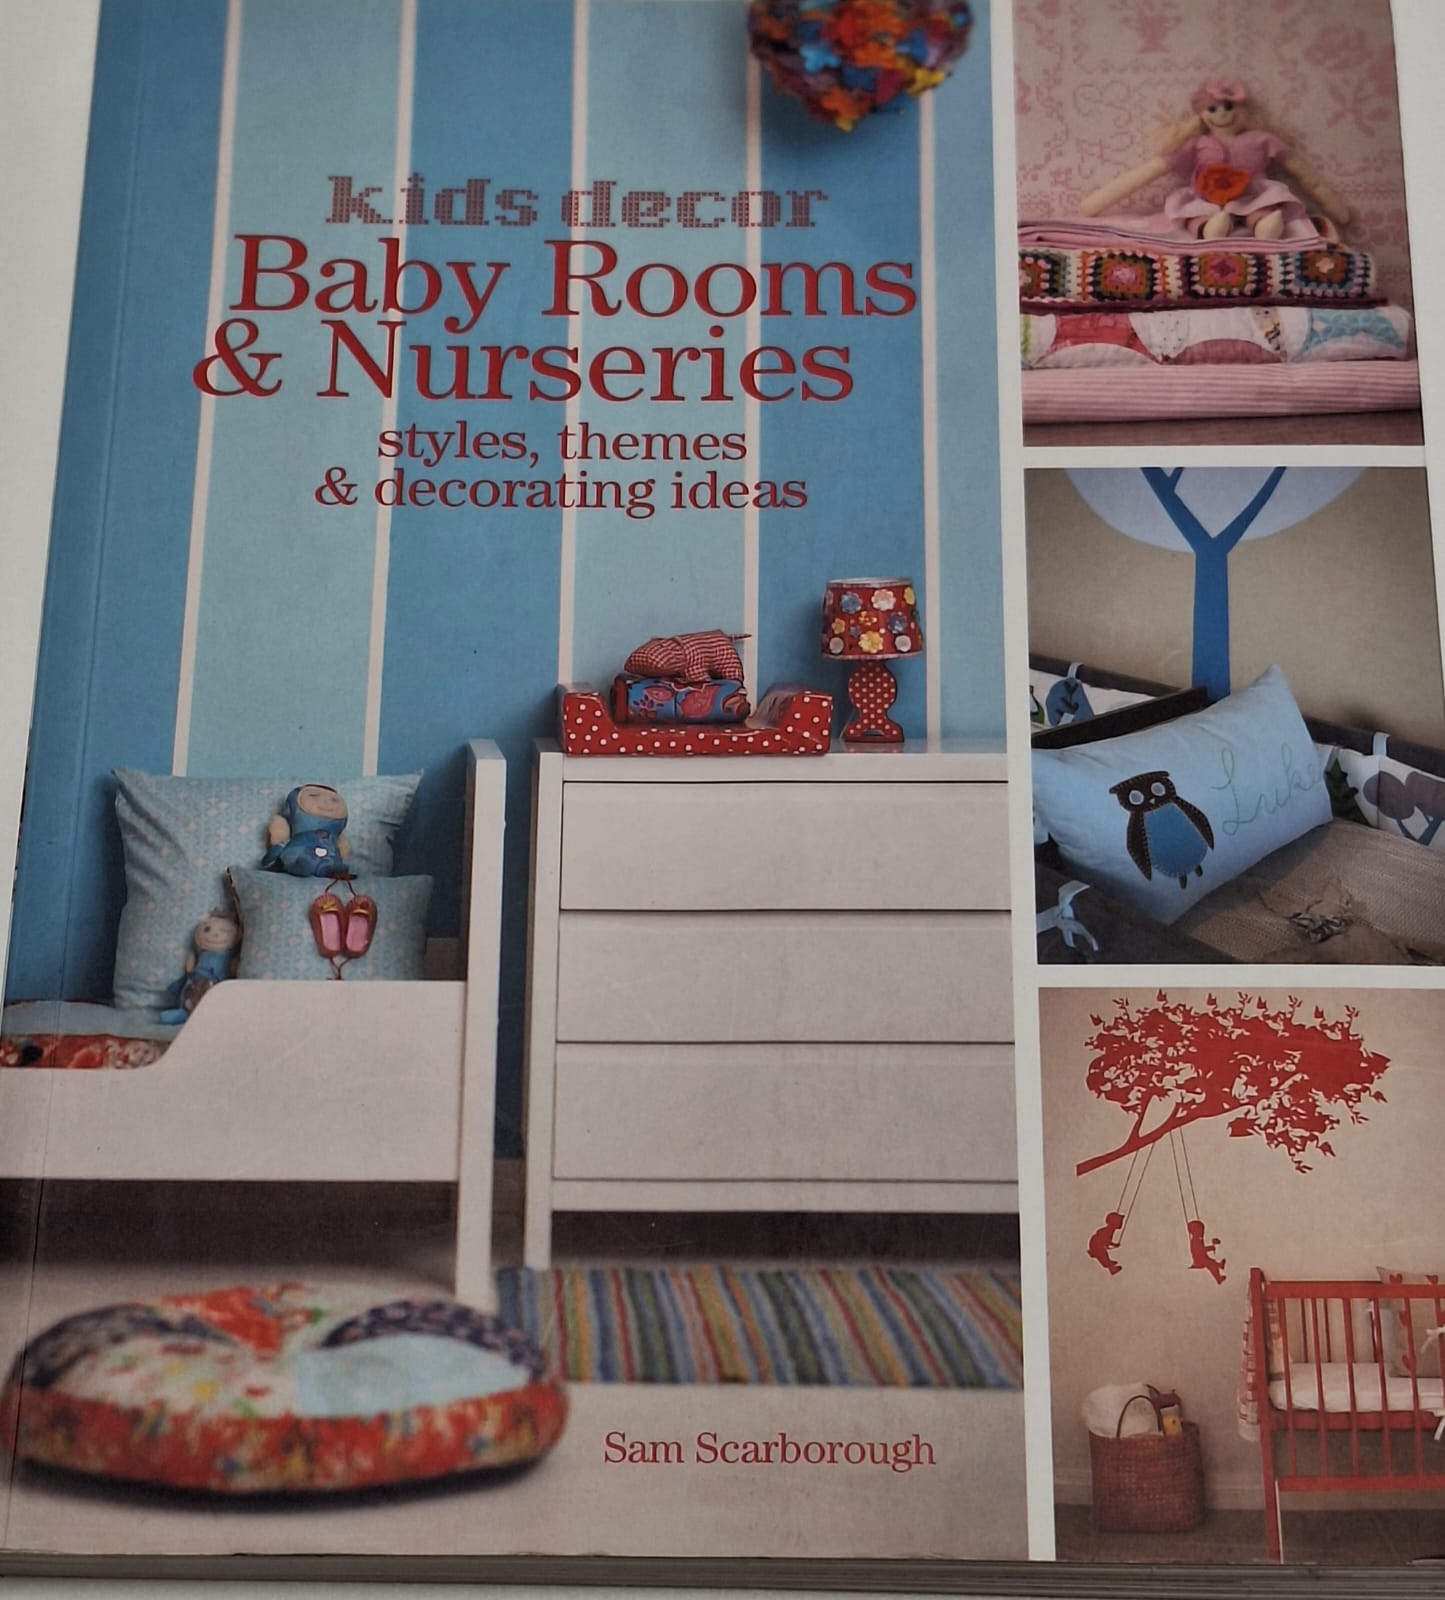 Scarborough, Sam - KIDS DECOR: BABY ROOMS & NURSERIES